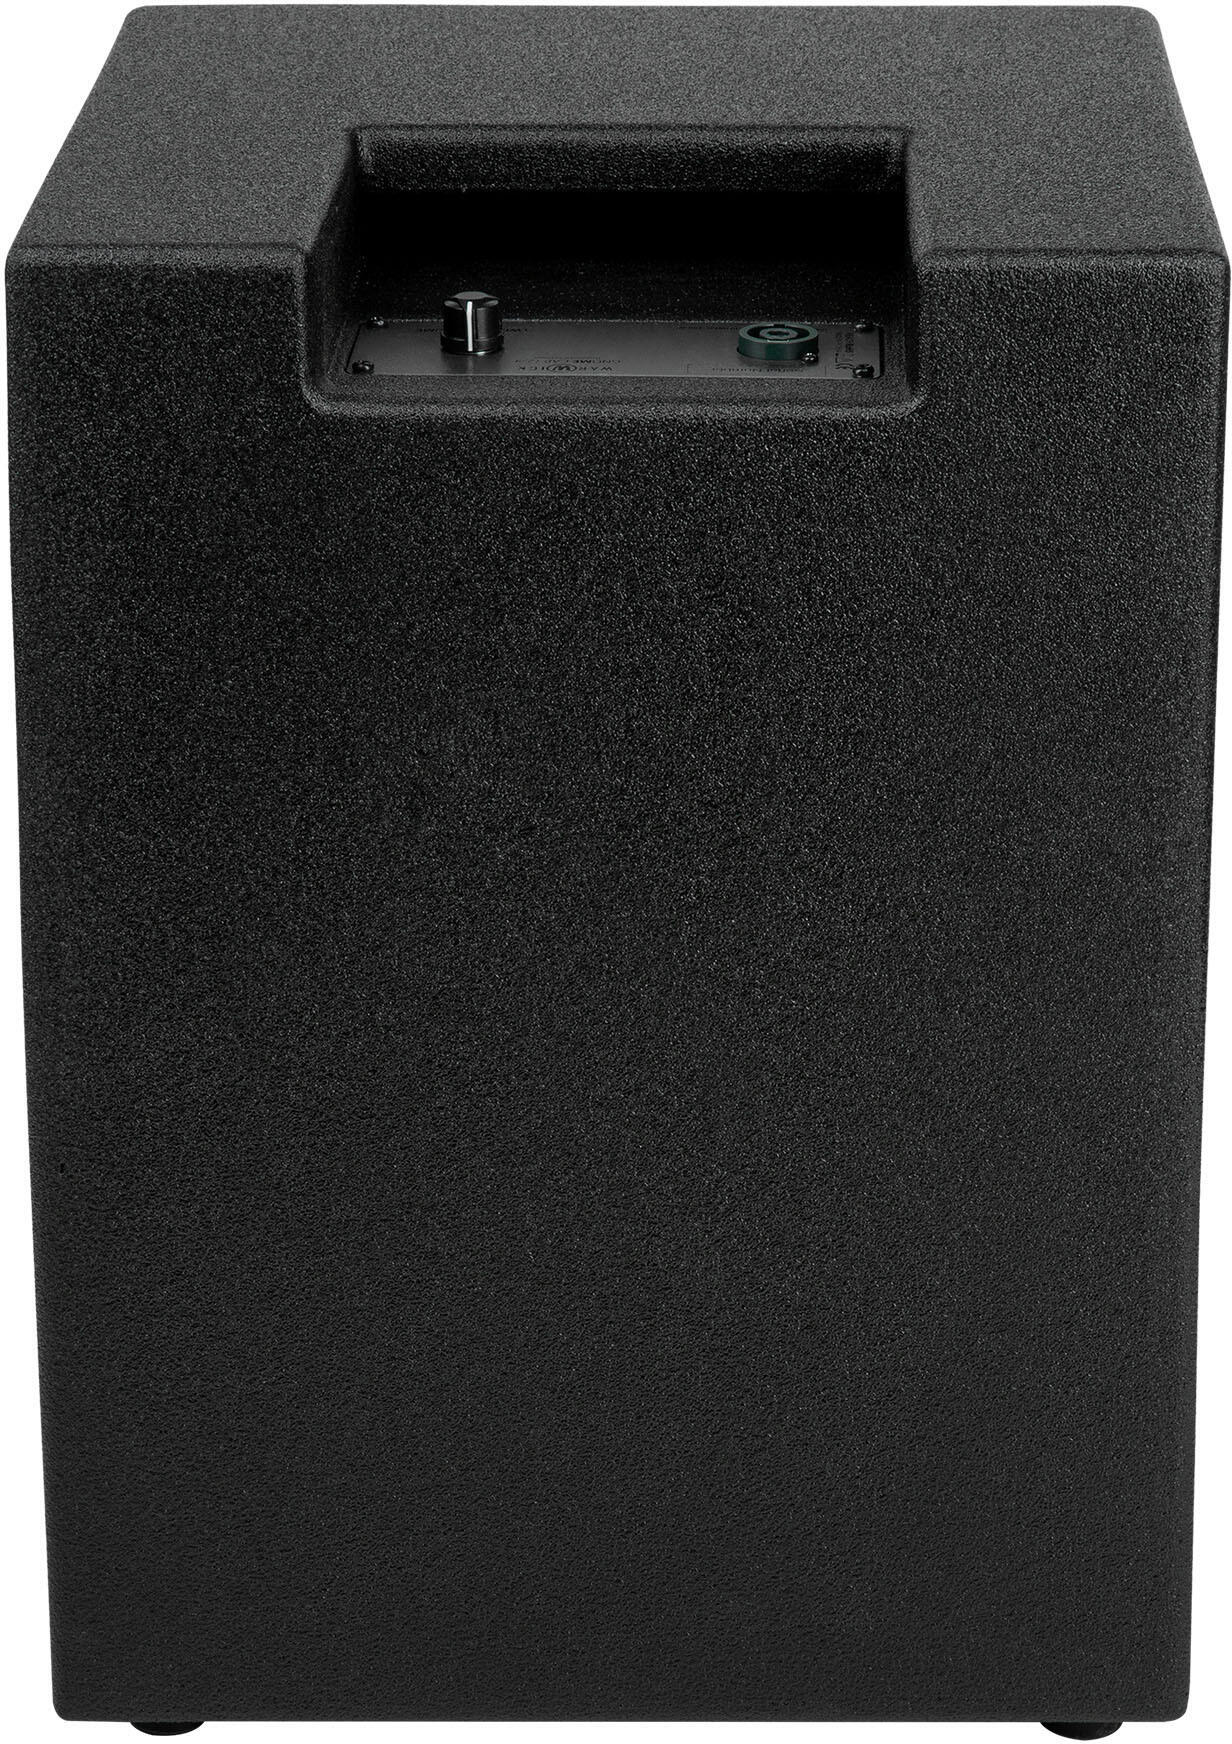 Warwick Gnome Pro Cab 12/4 Bass Cab 1x12 300w 4-ohms - Speakerkast voor bas - Variation 1